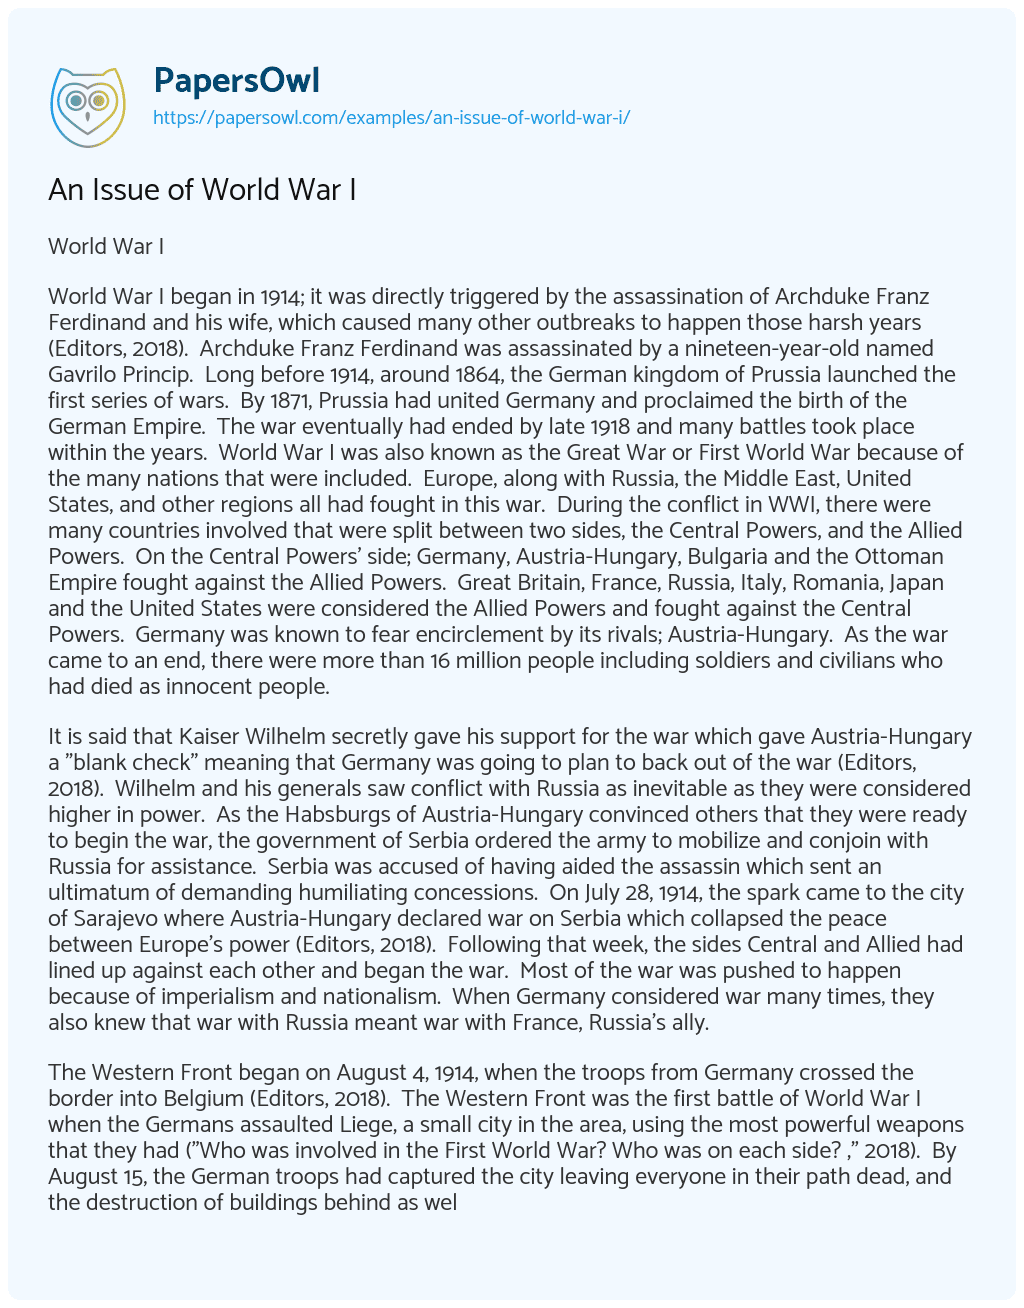 An Issue of World War i essay